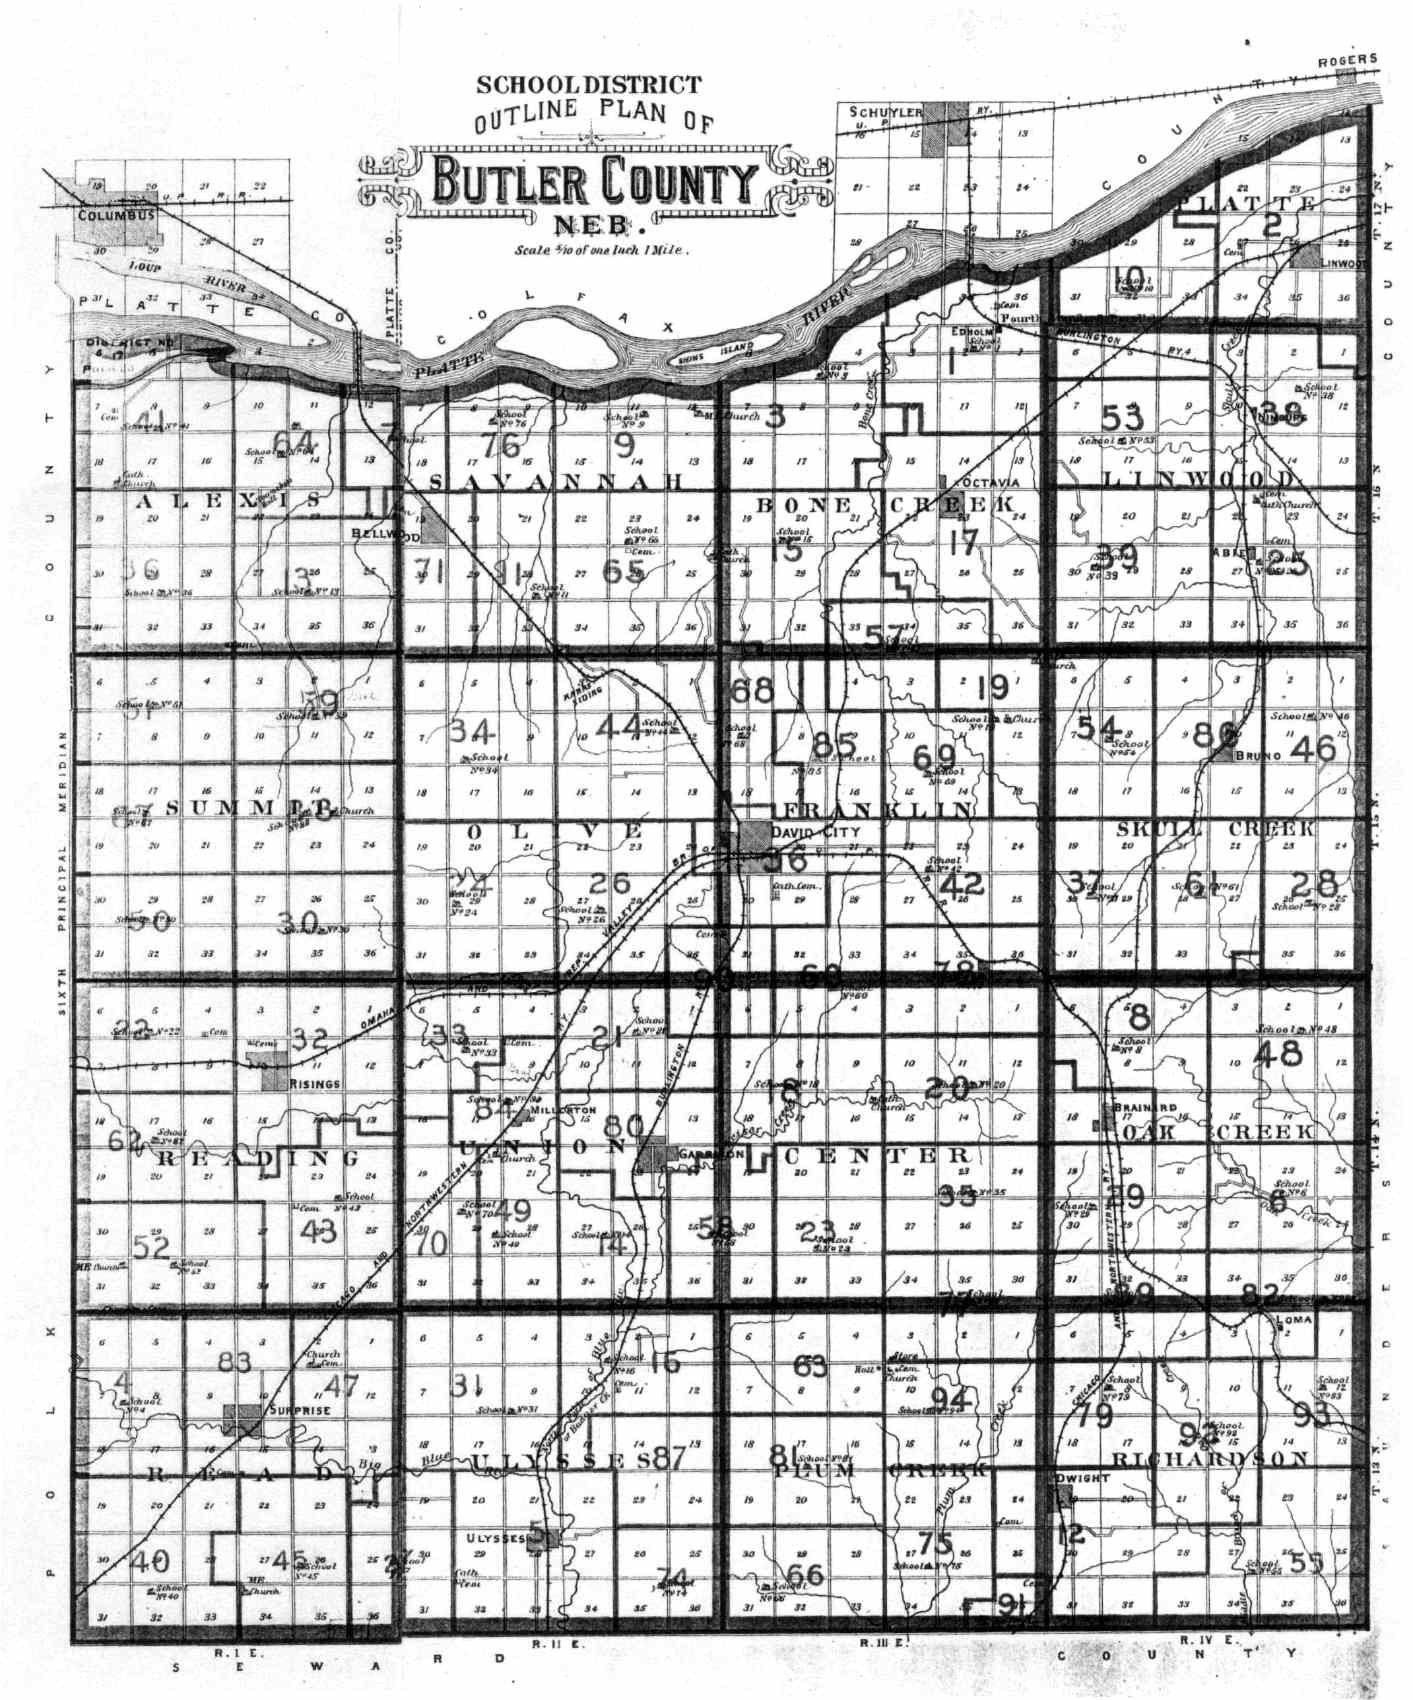 Schools of Butler County Nebraska Plat Map for 1906